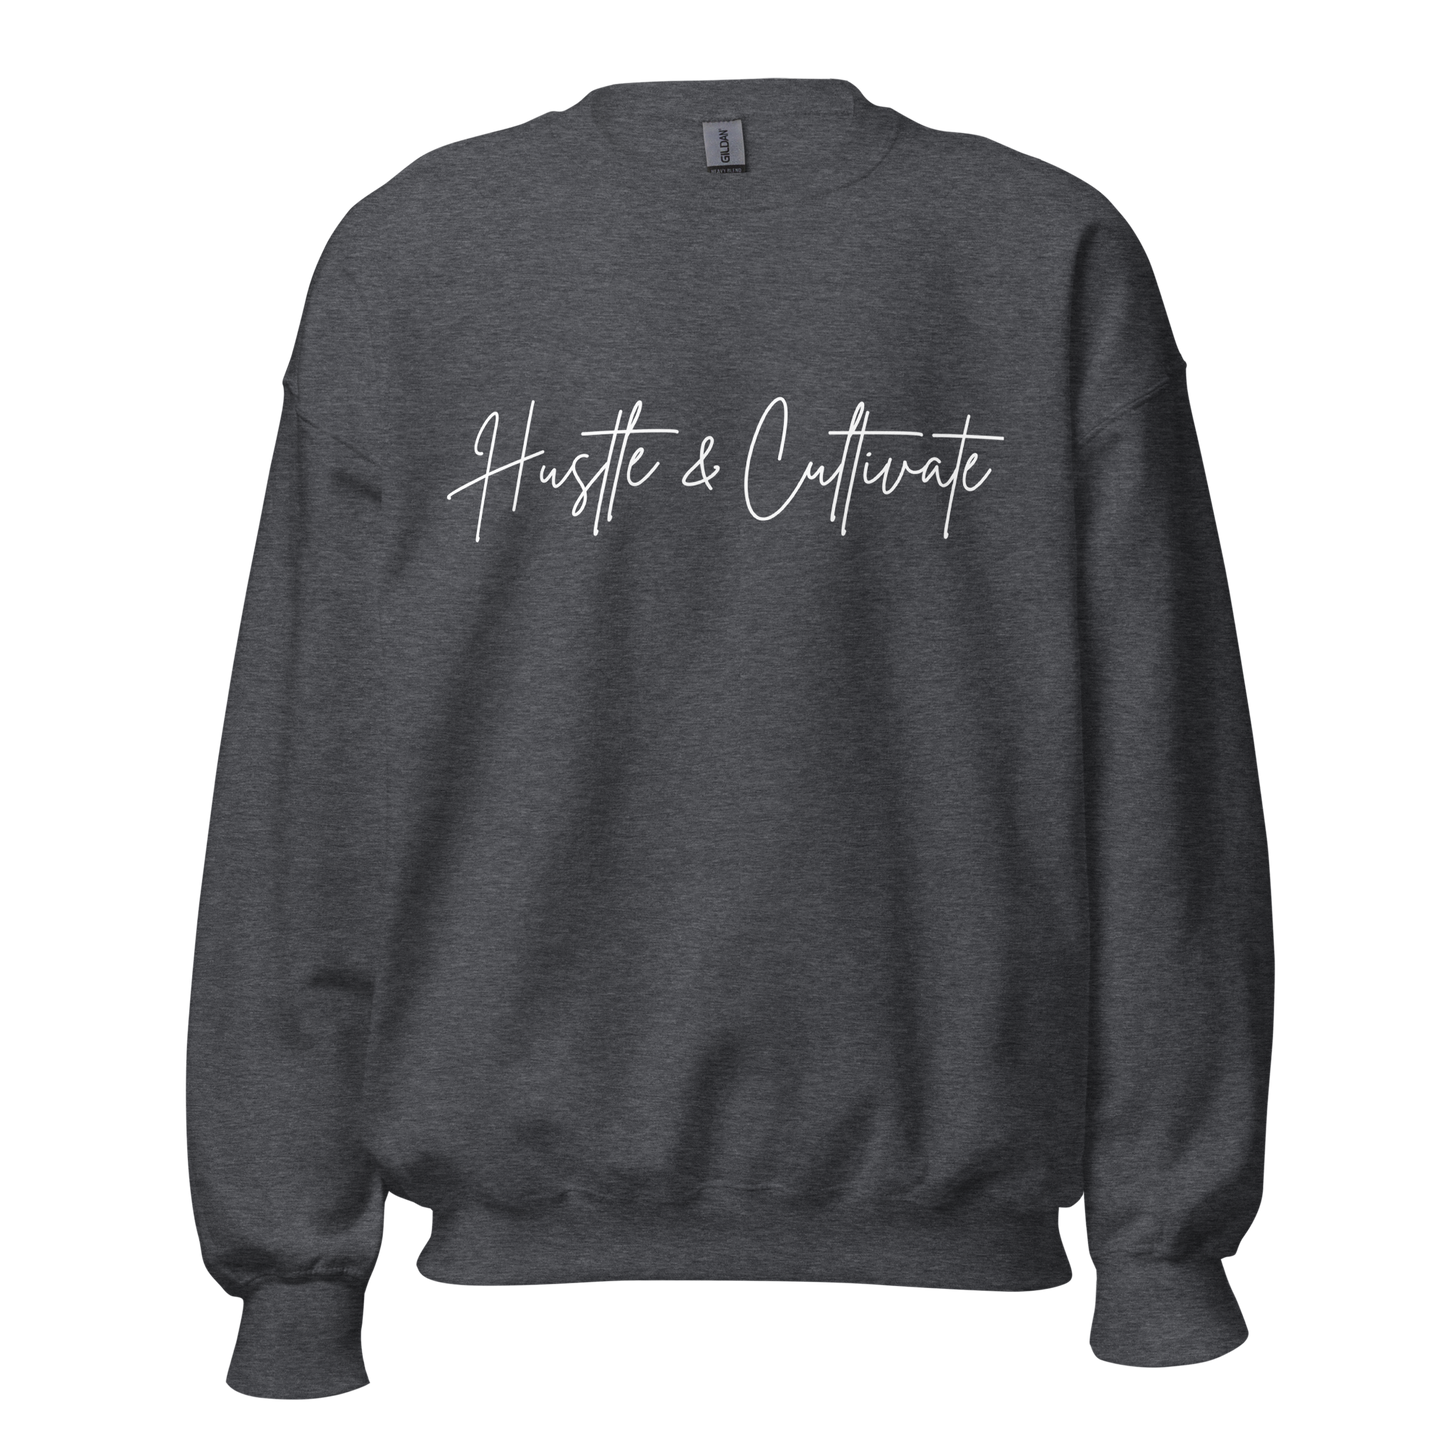 Inspired by the Hustle Sweatshirt